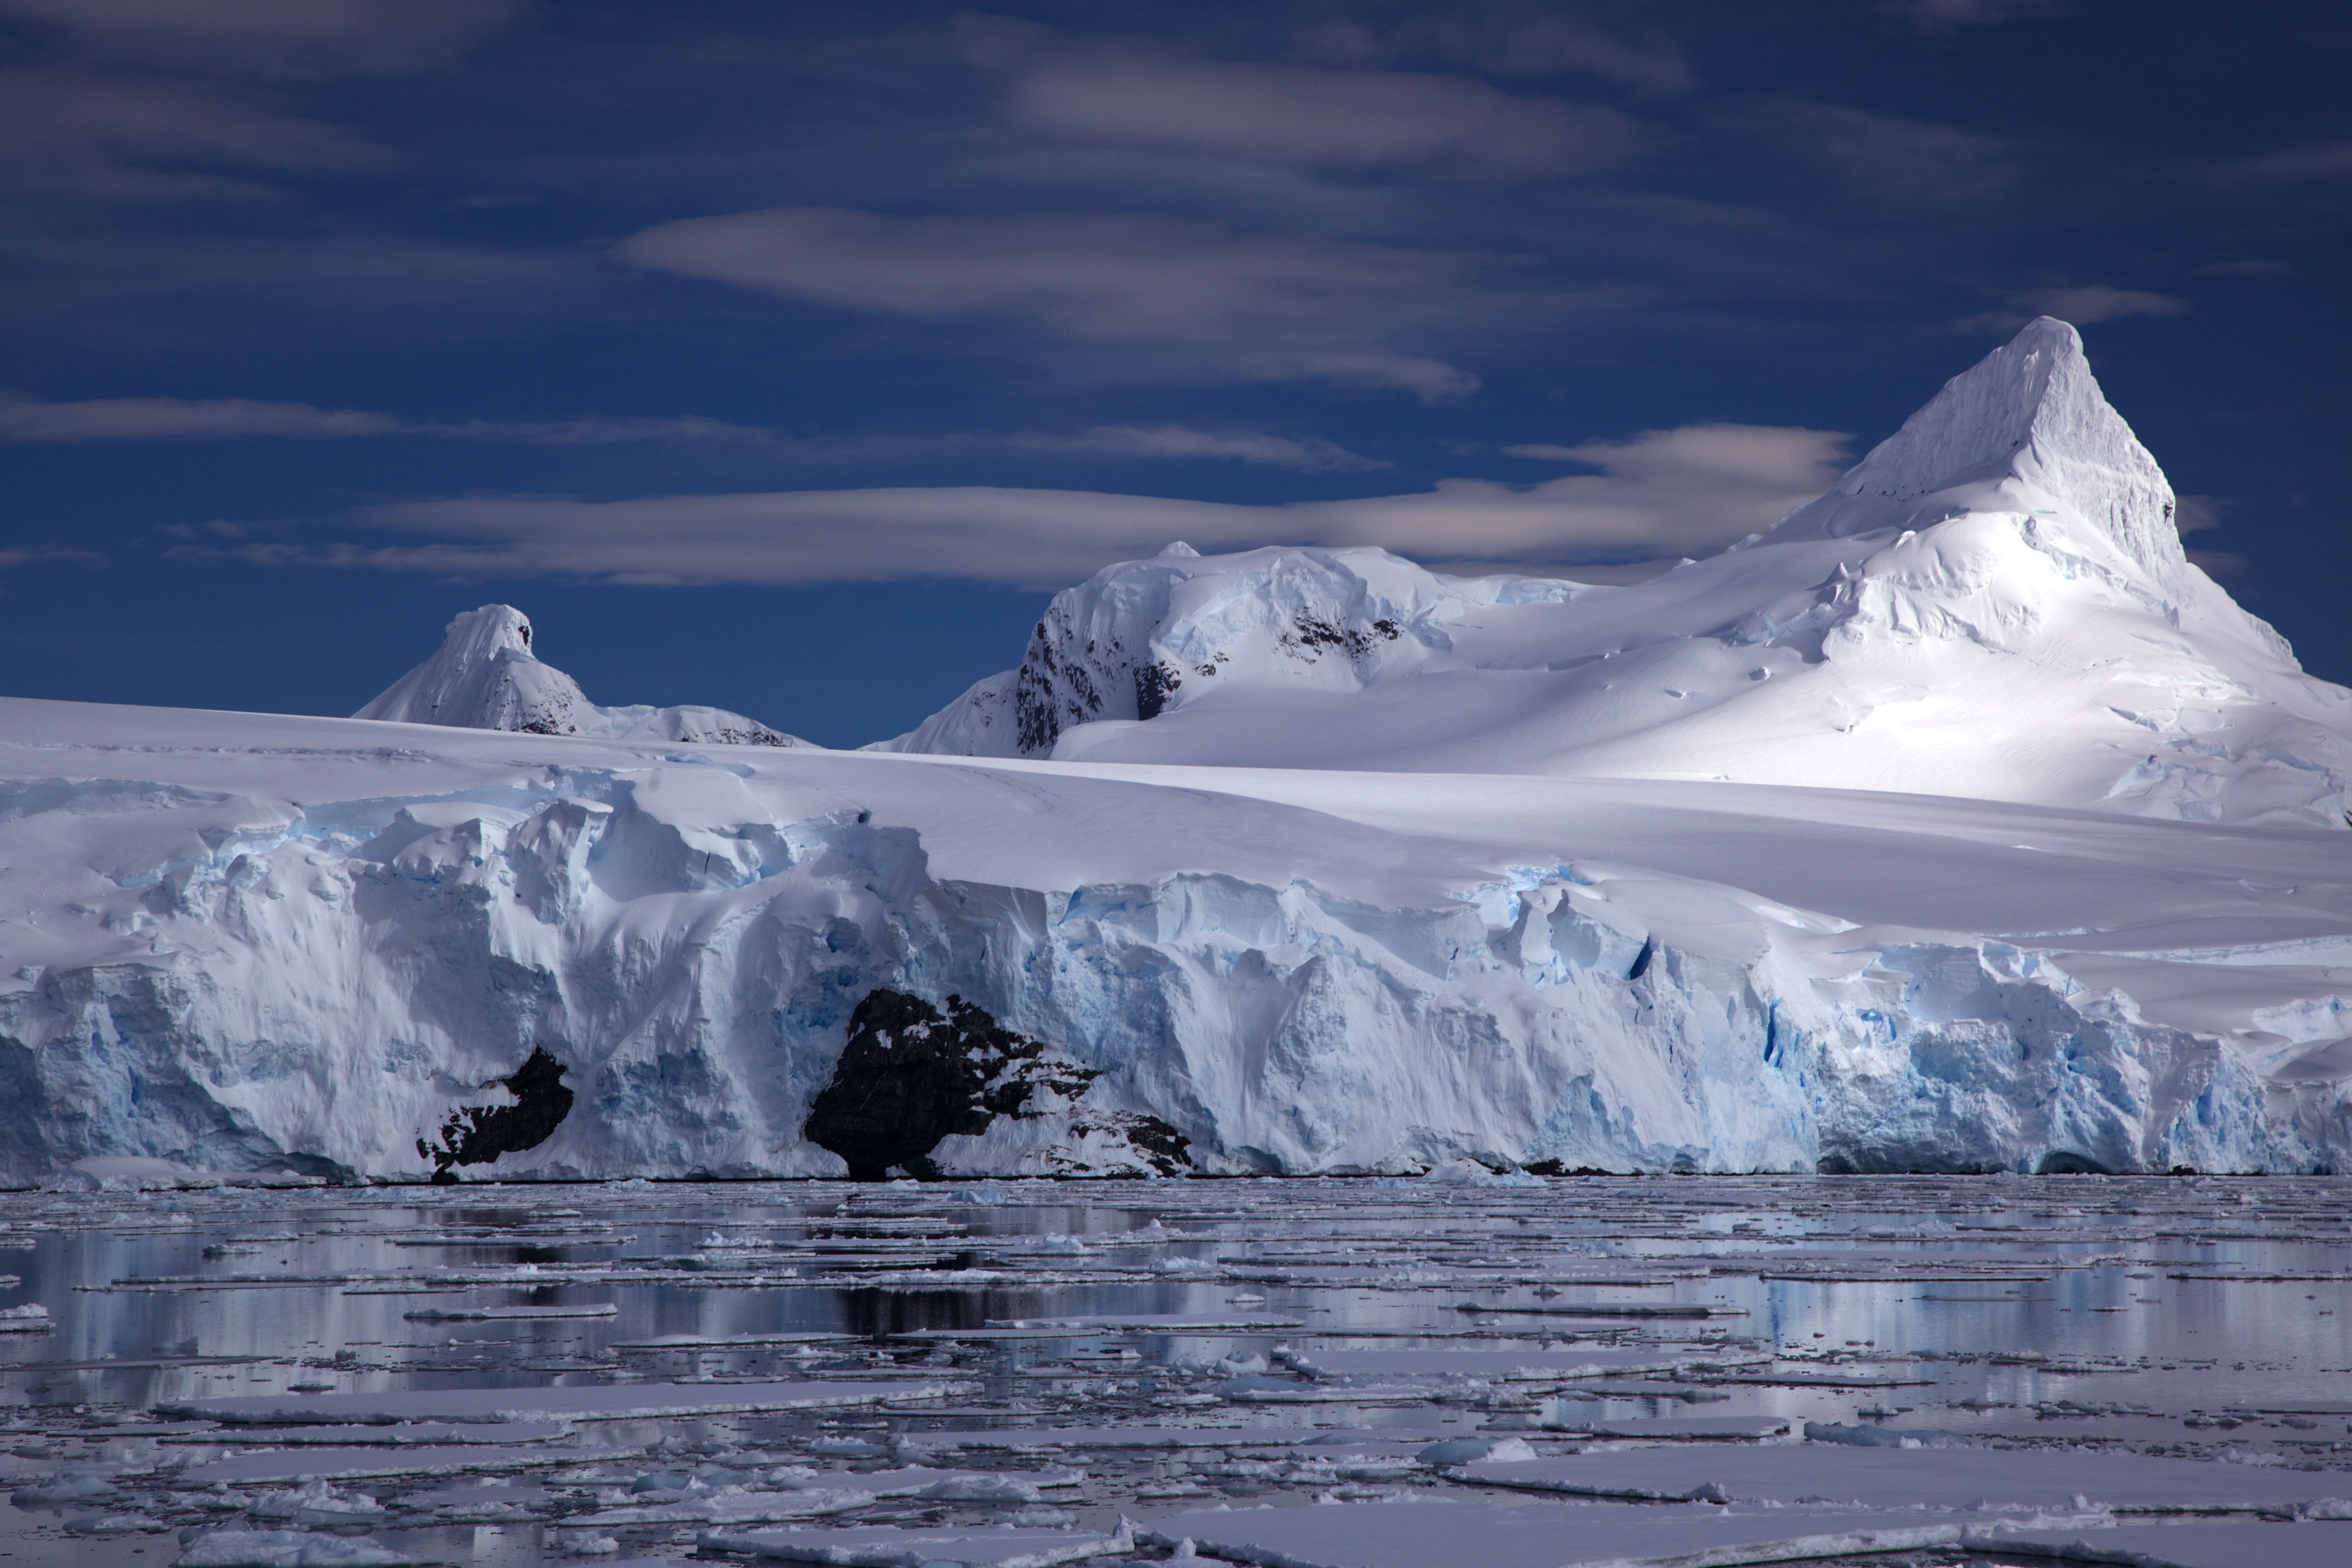 Антарктическое государство. Антарктида. Горы Гамбурцева в Антарктиде. Ледяной Покров Антарктиды. Антарктида ледяной материк.